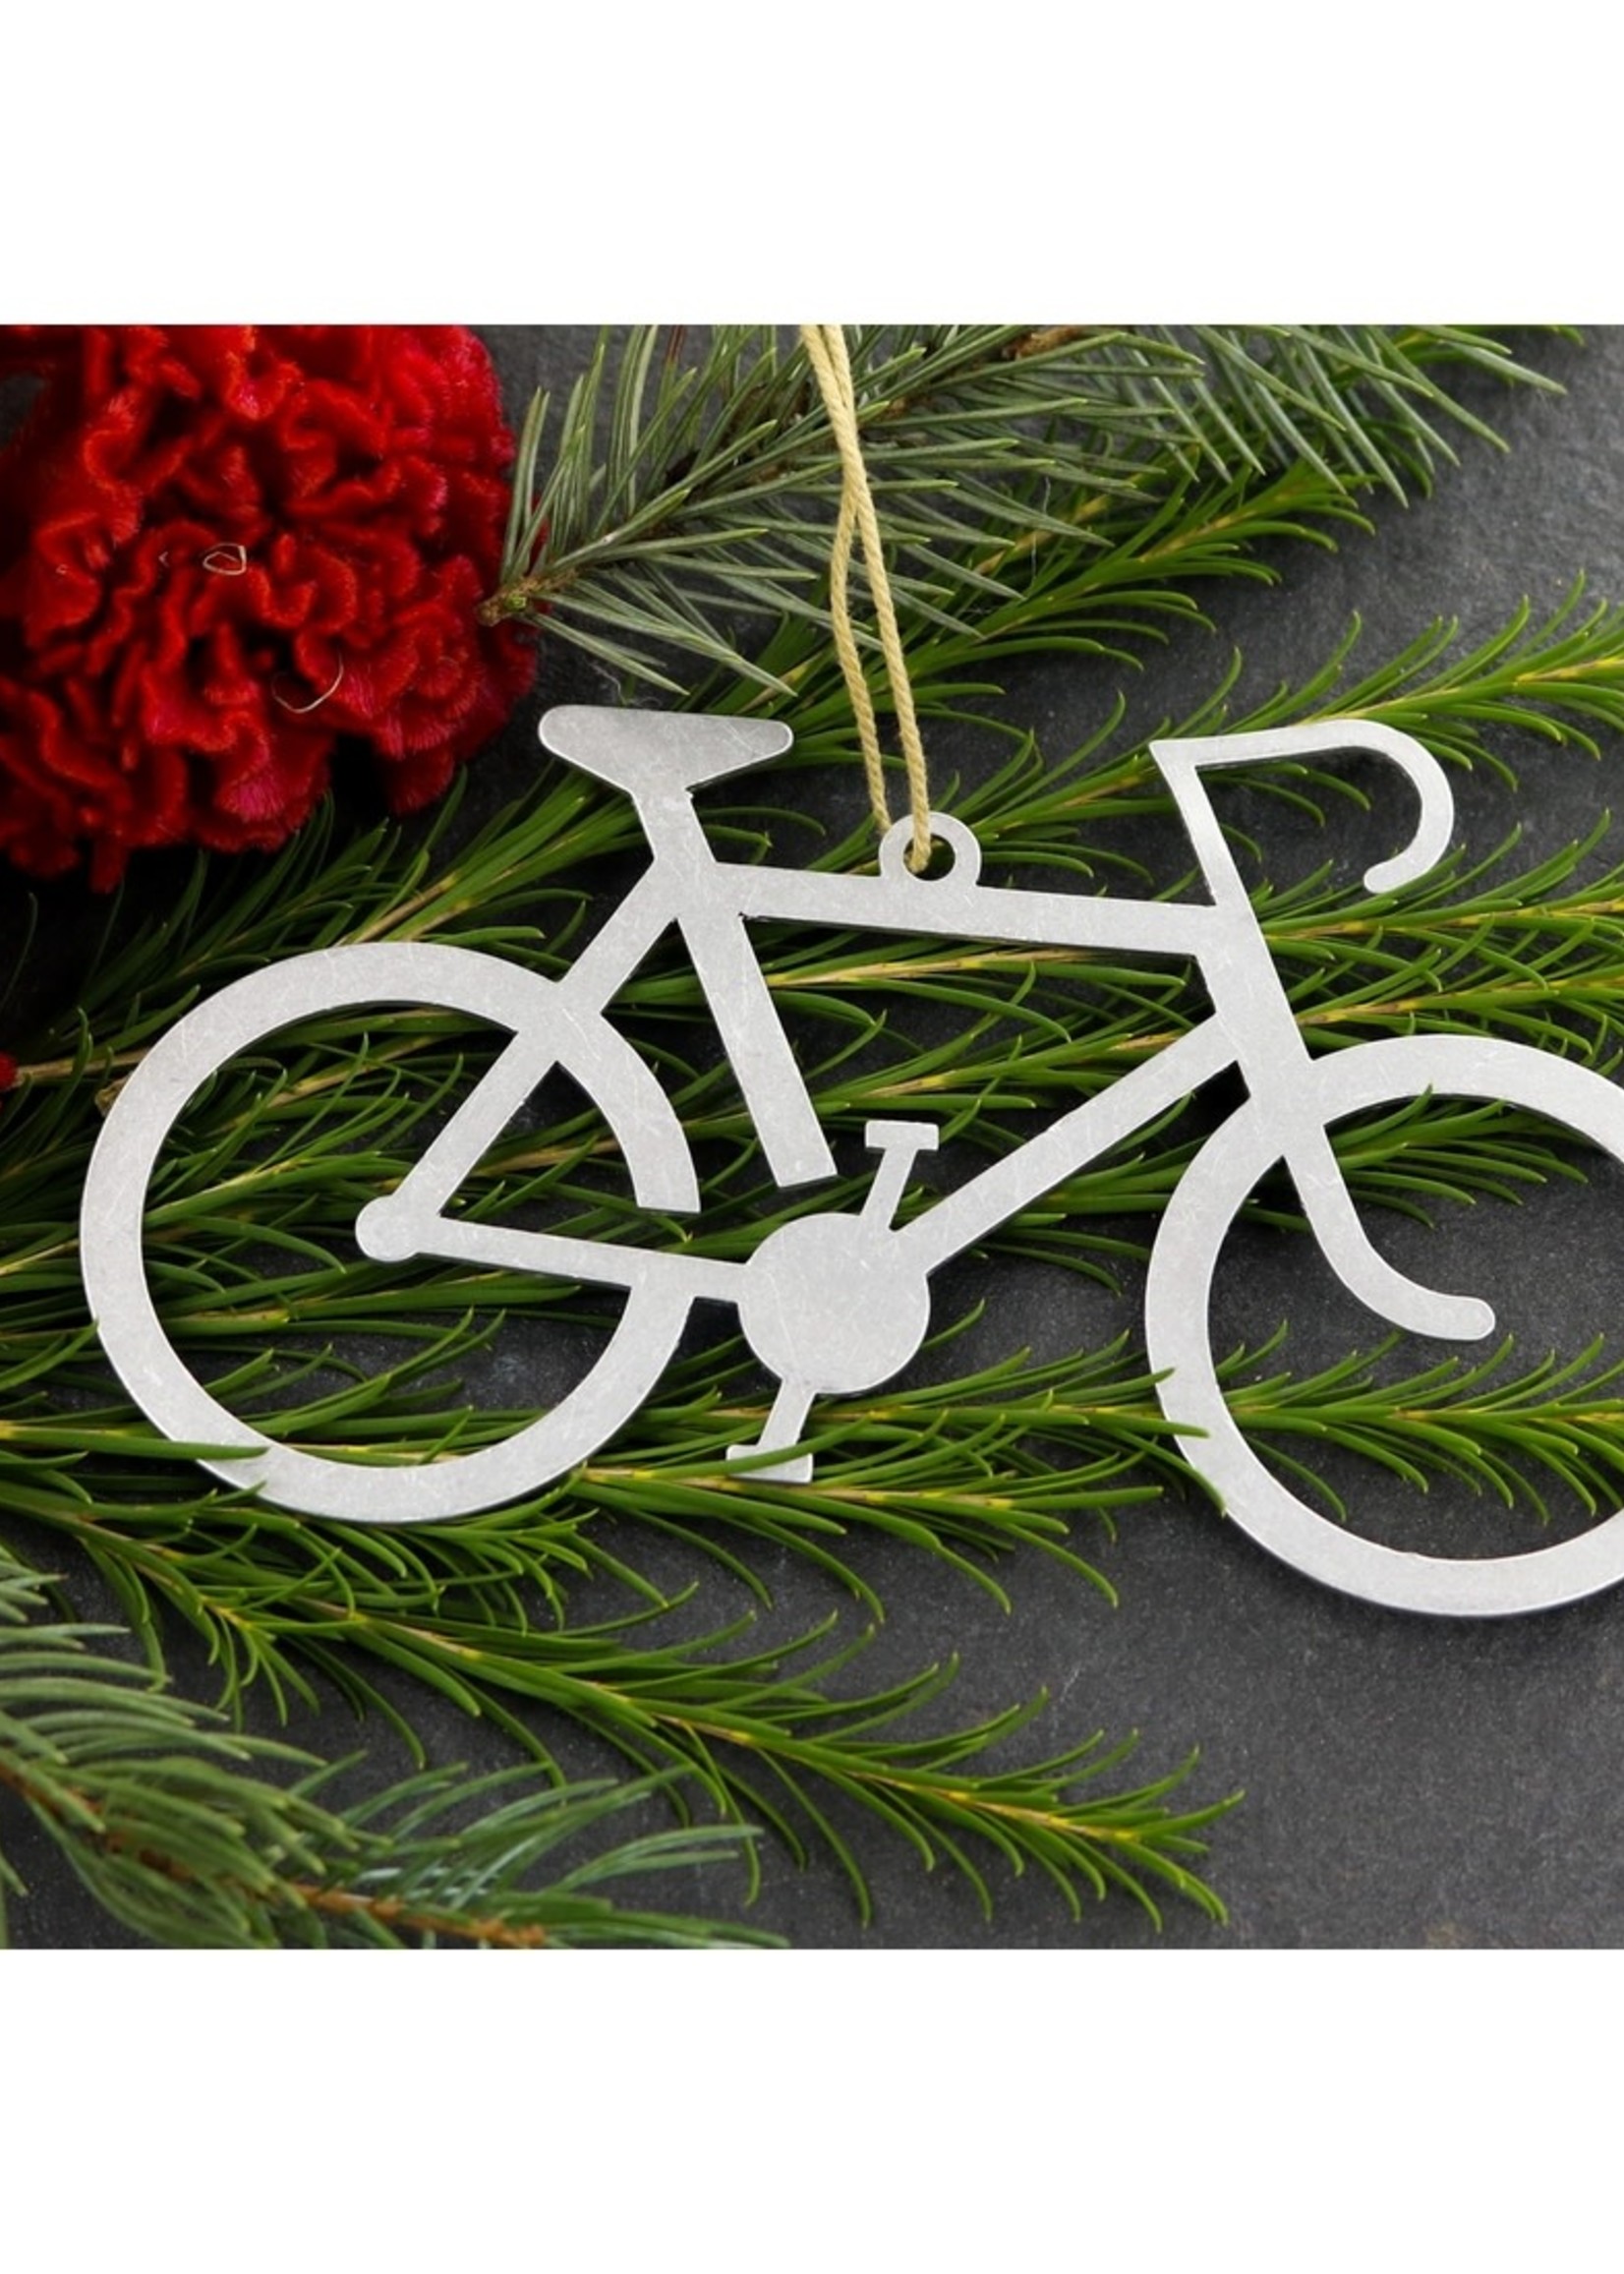 Iron Maid Art Bicycle Metal Ornament